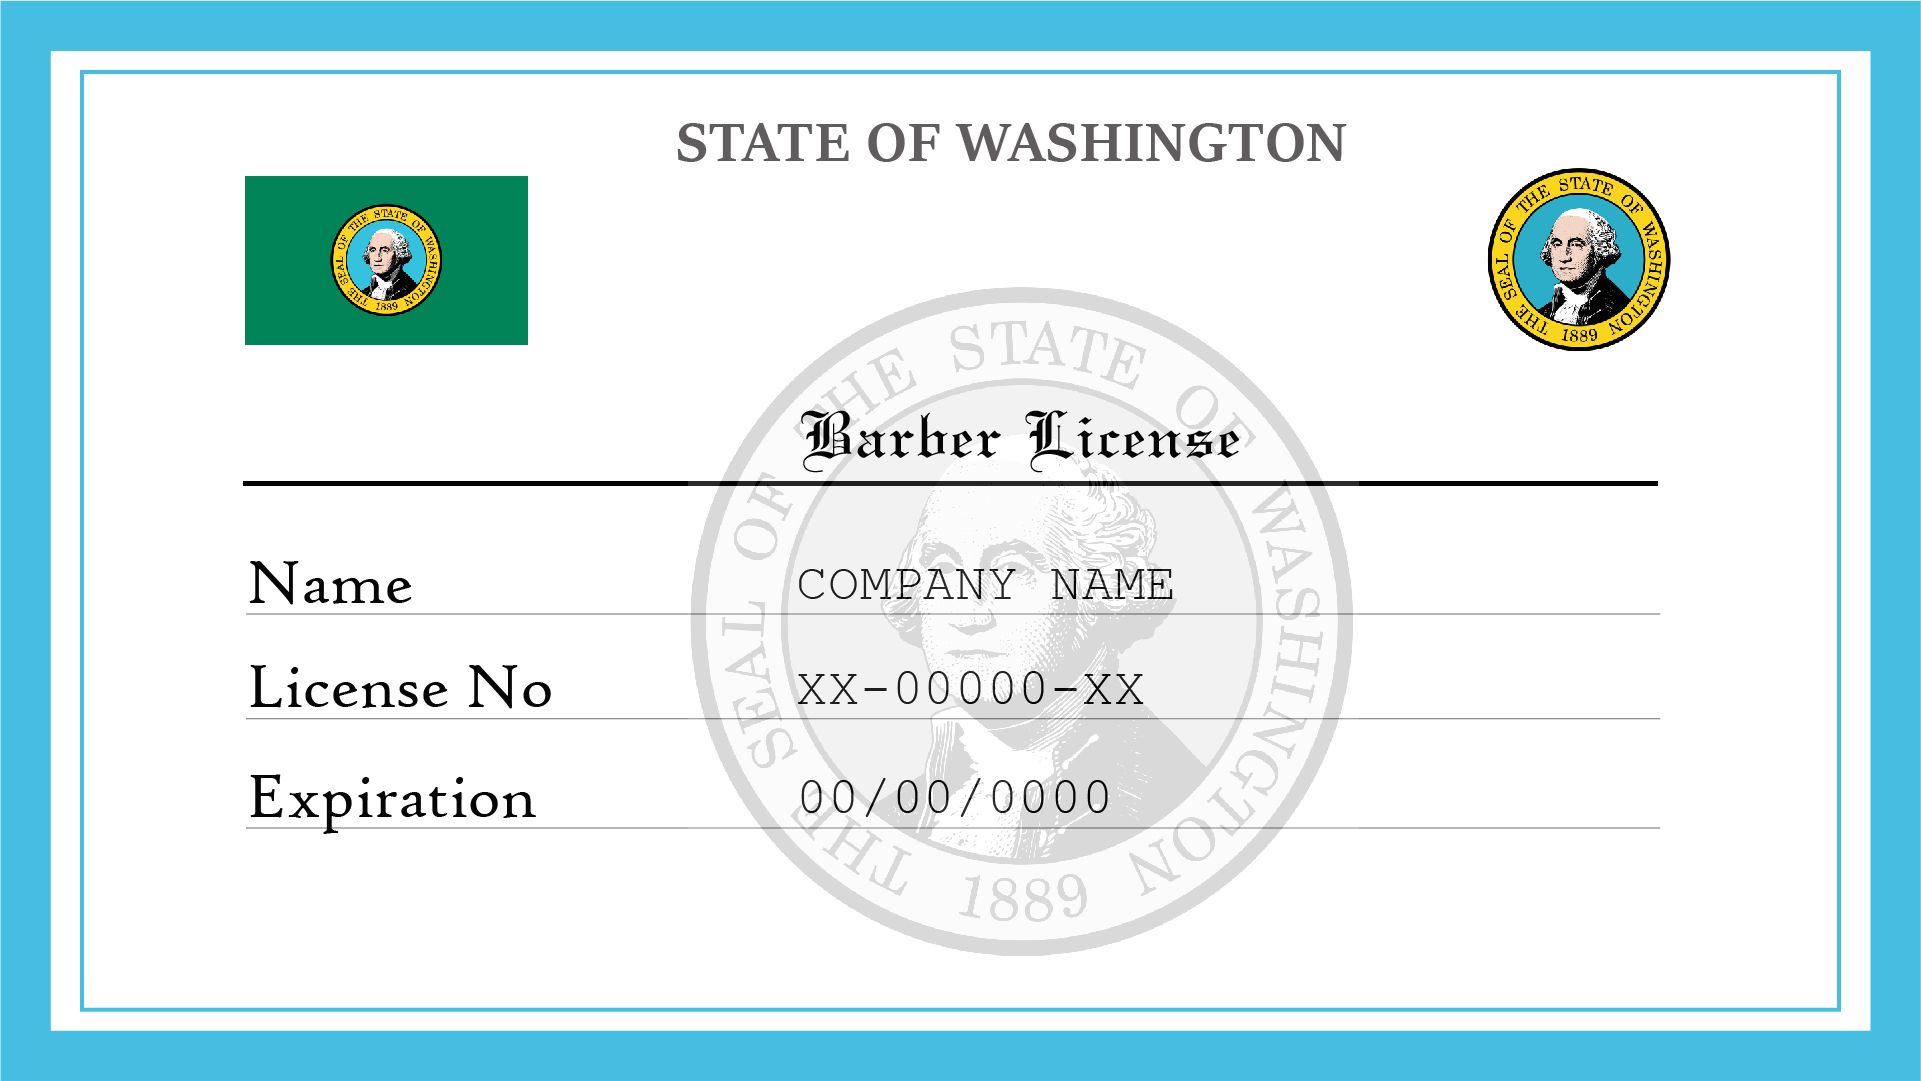 Washington Barber License 544f81f243 